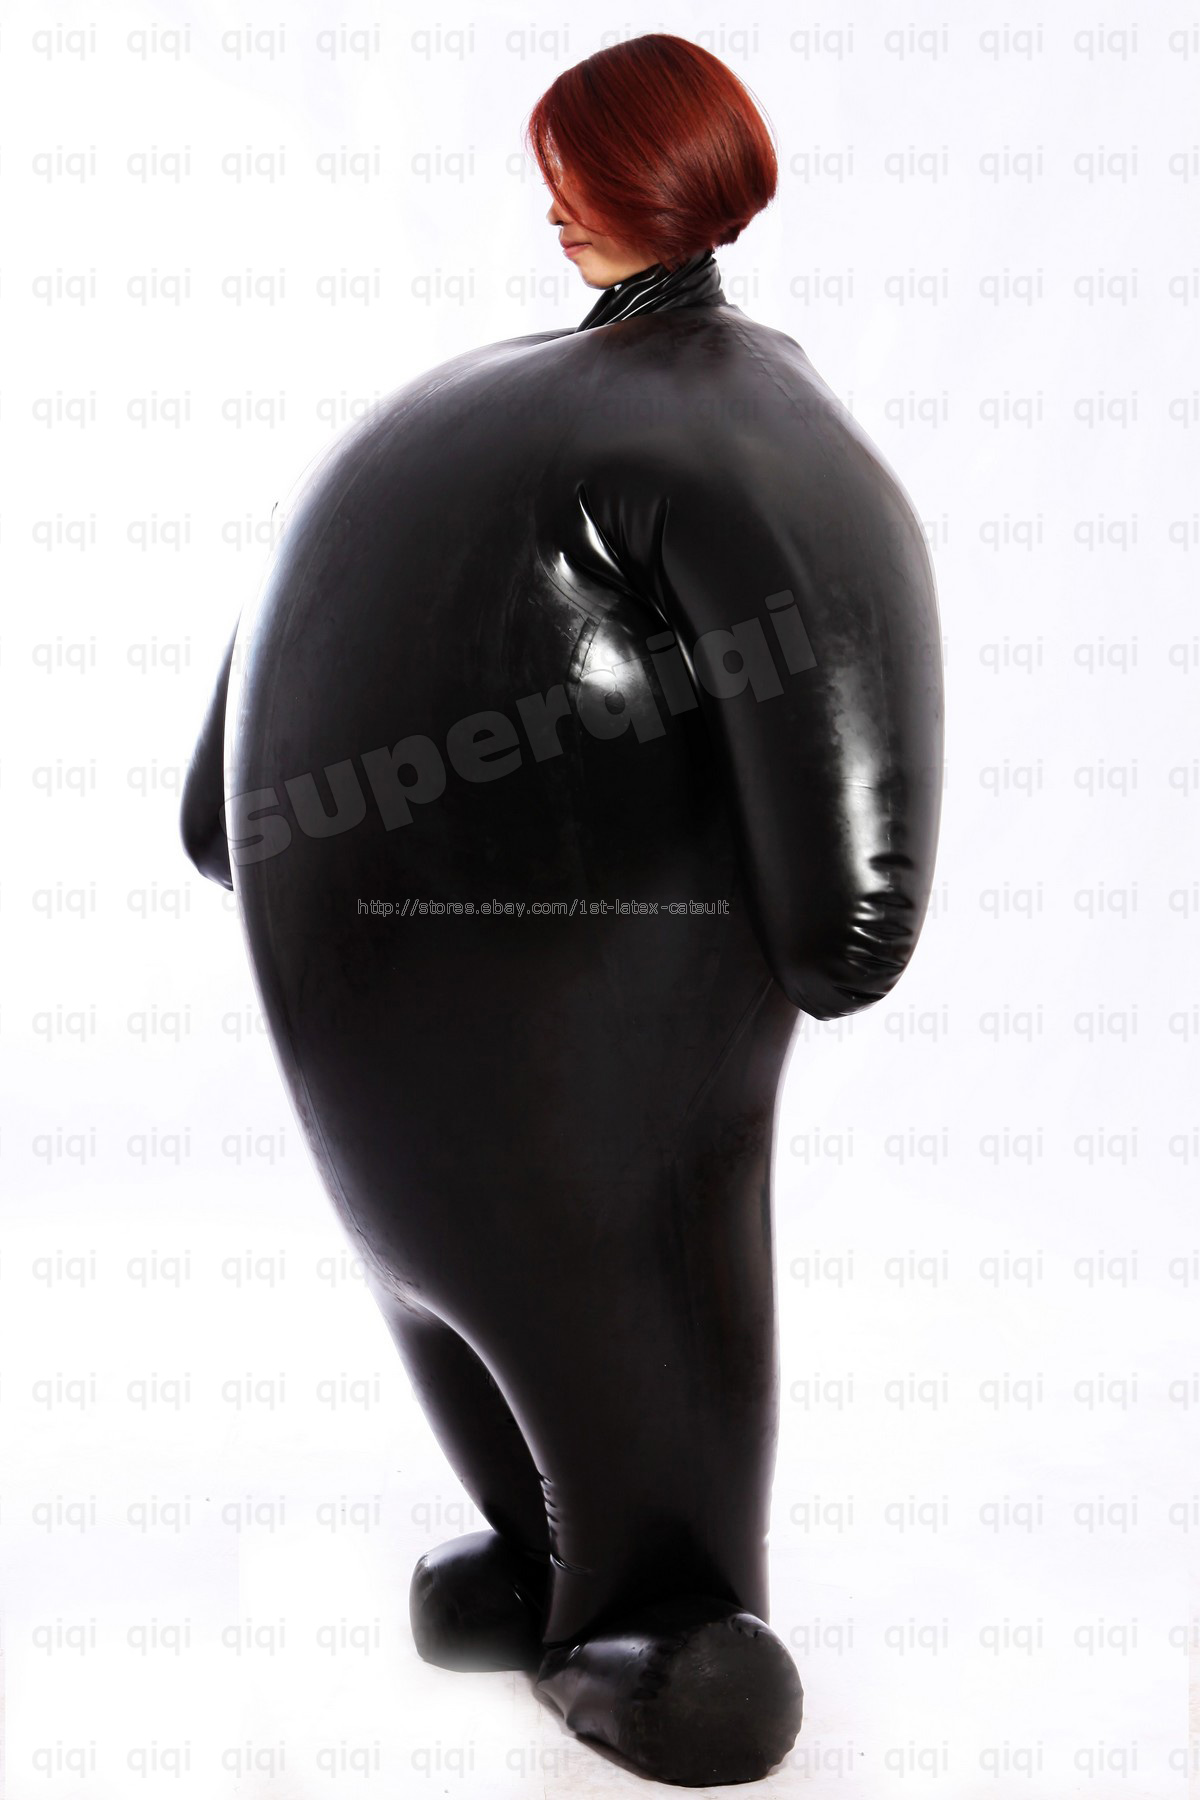 Latex/rubber/gummi/0.45mm Inflatable Catsuit ball mask hood suit unique ...